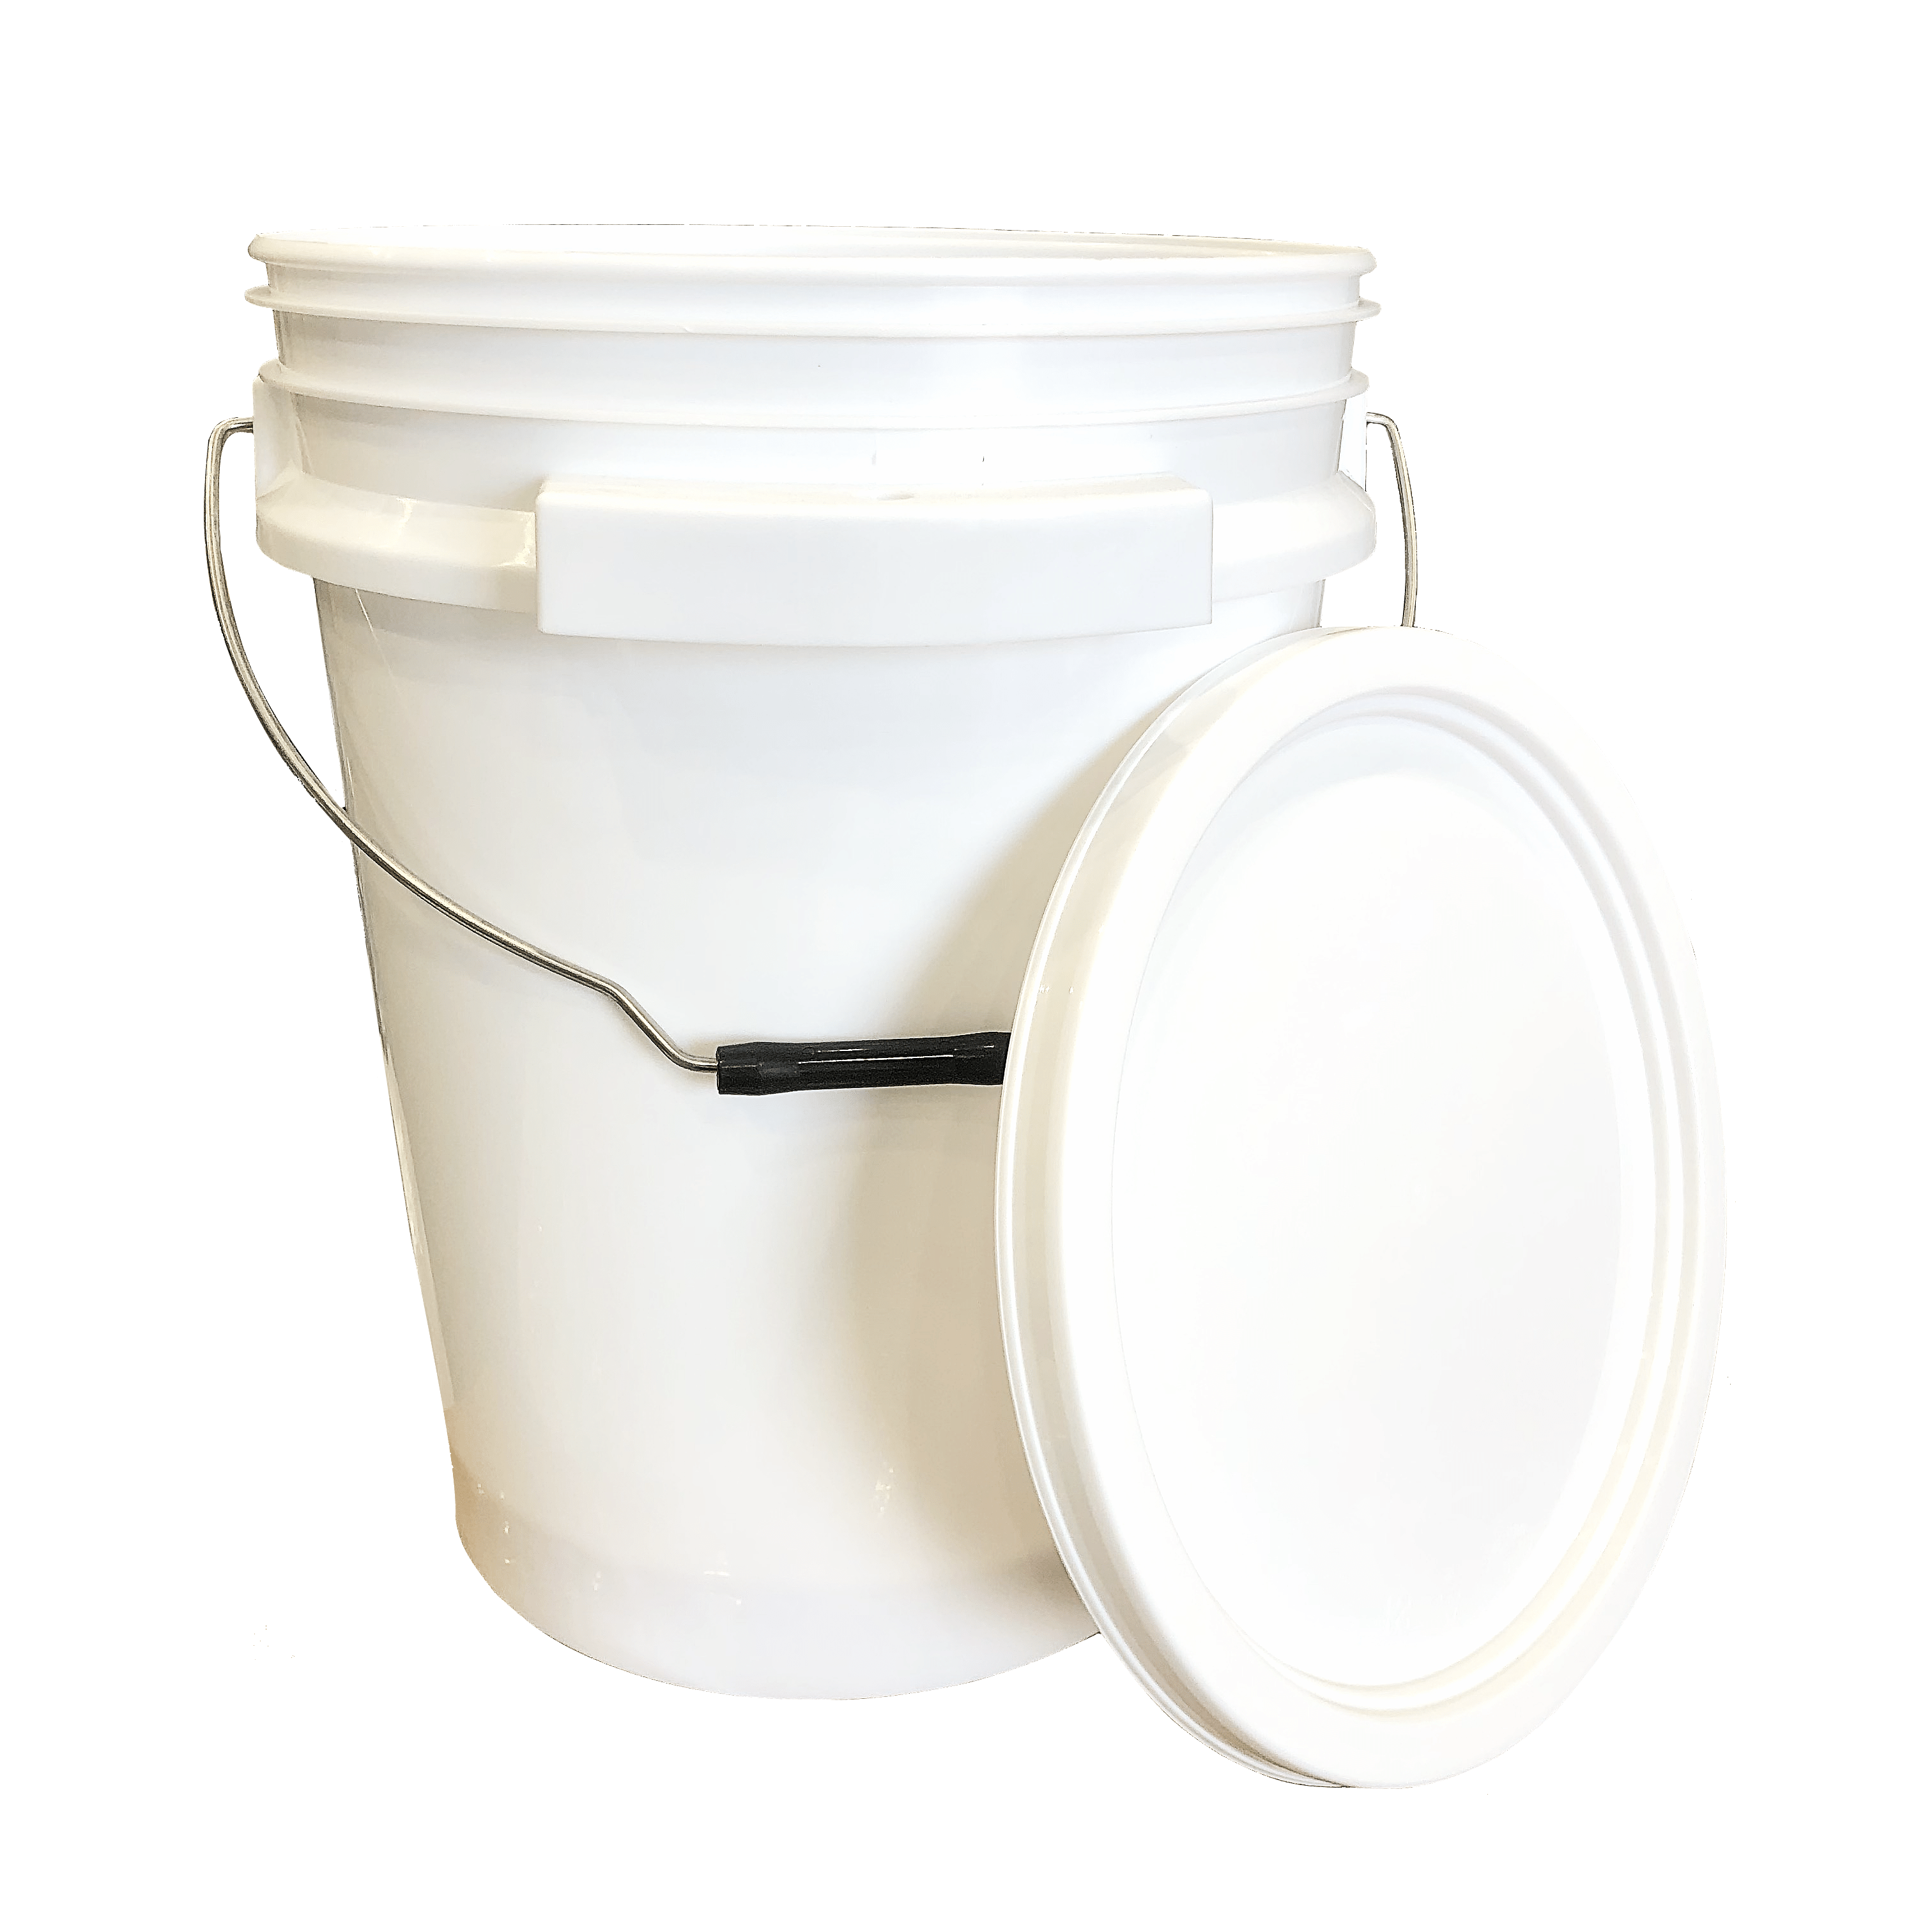 Lee Fisher Sports Bucket - 5 Gallon Metal Handle iSmart Bucket with Lid,  White Color